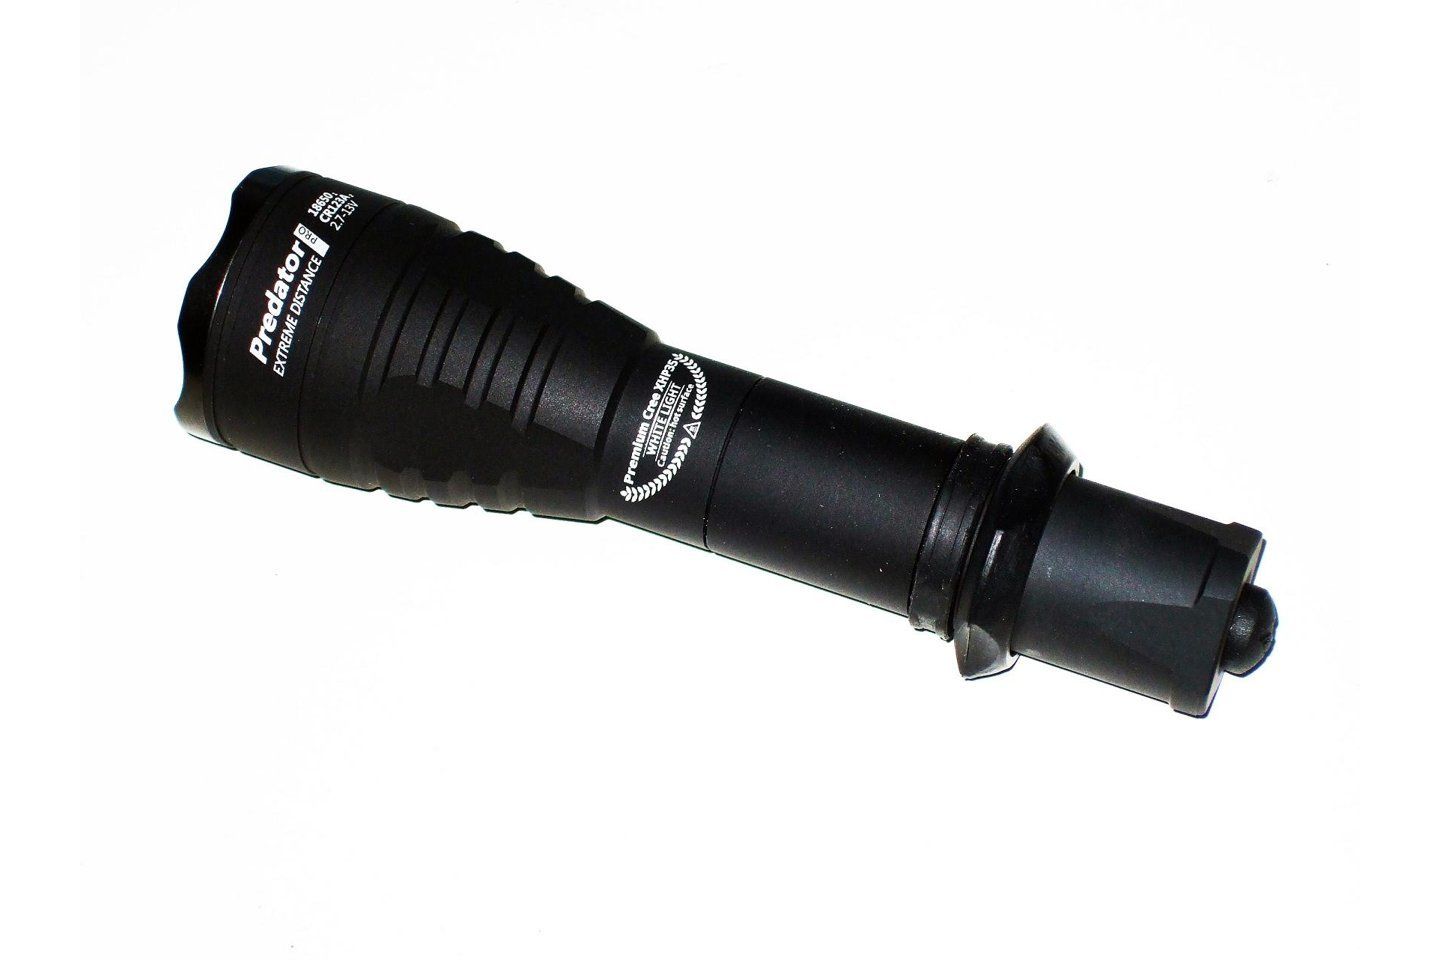 New Armytek Predator Pro (Warm) 1570 Lumens LED Flashlight Torch (With Battery)